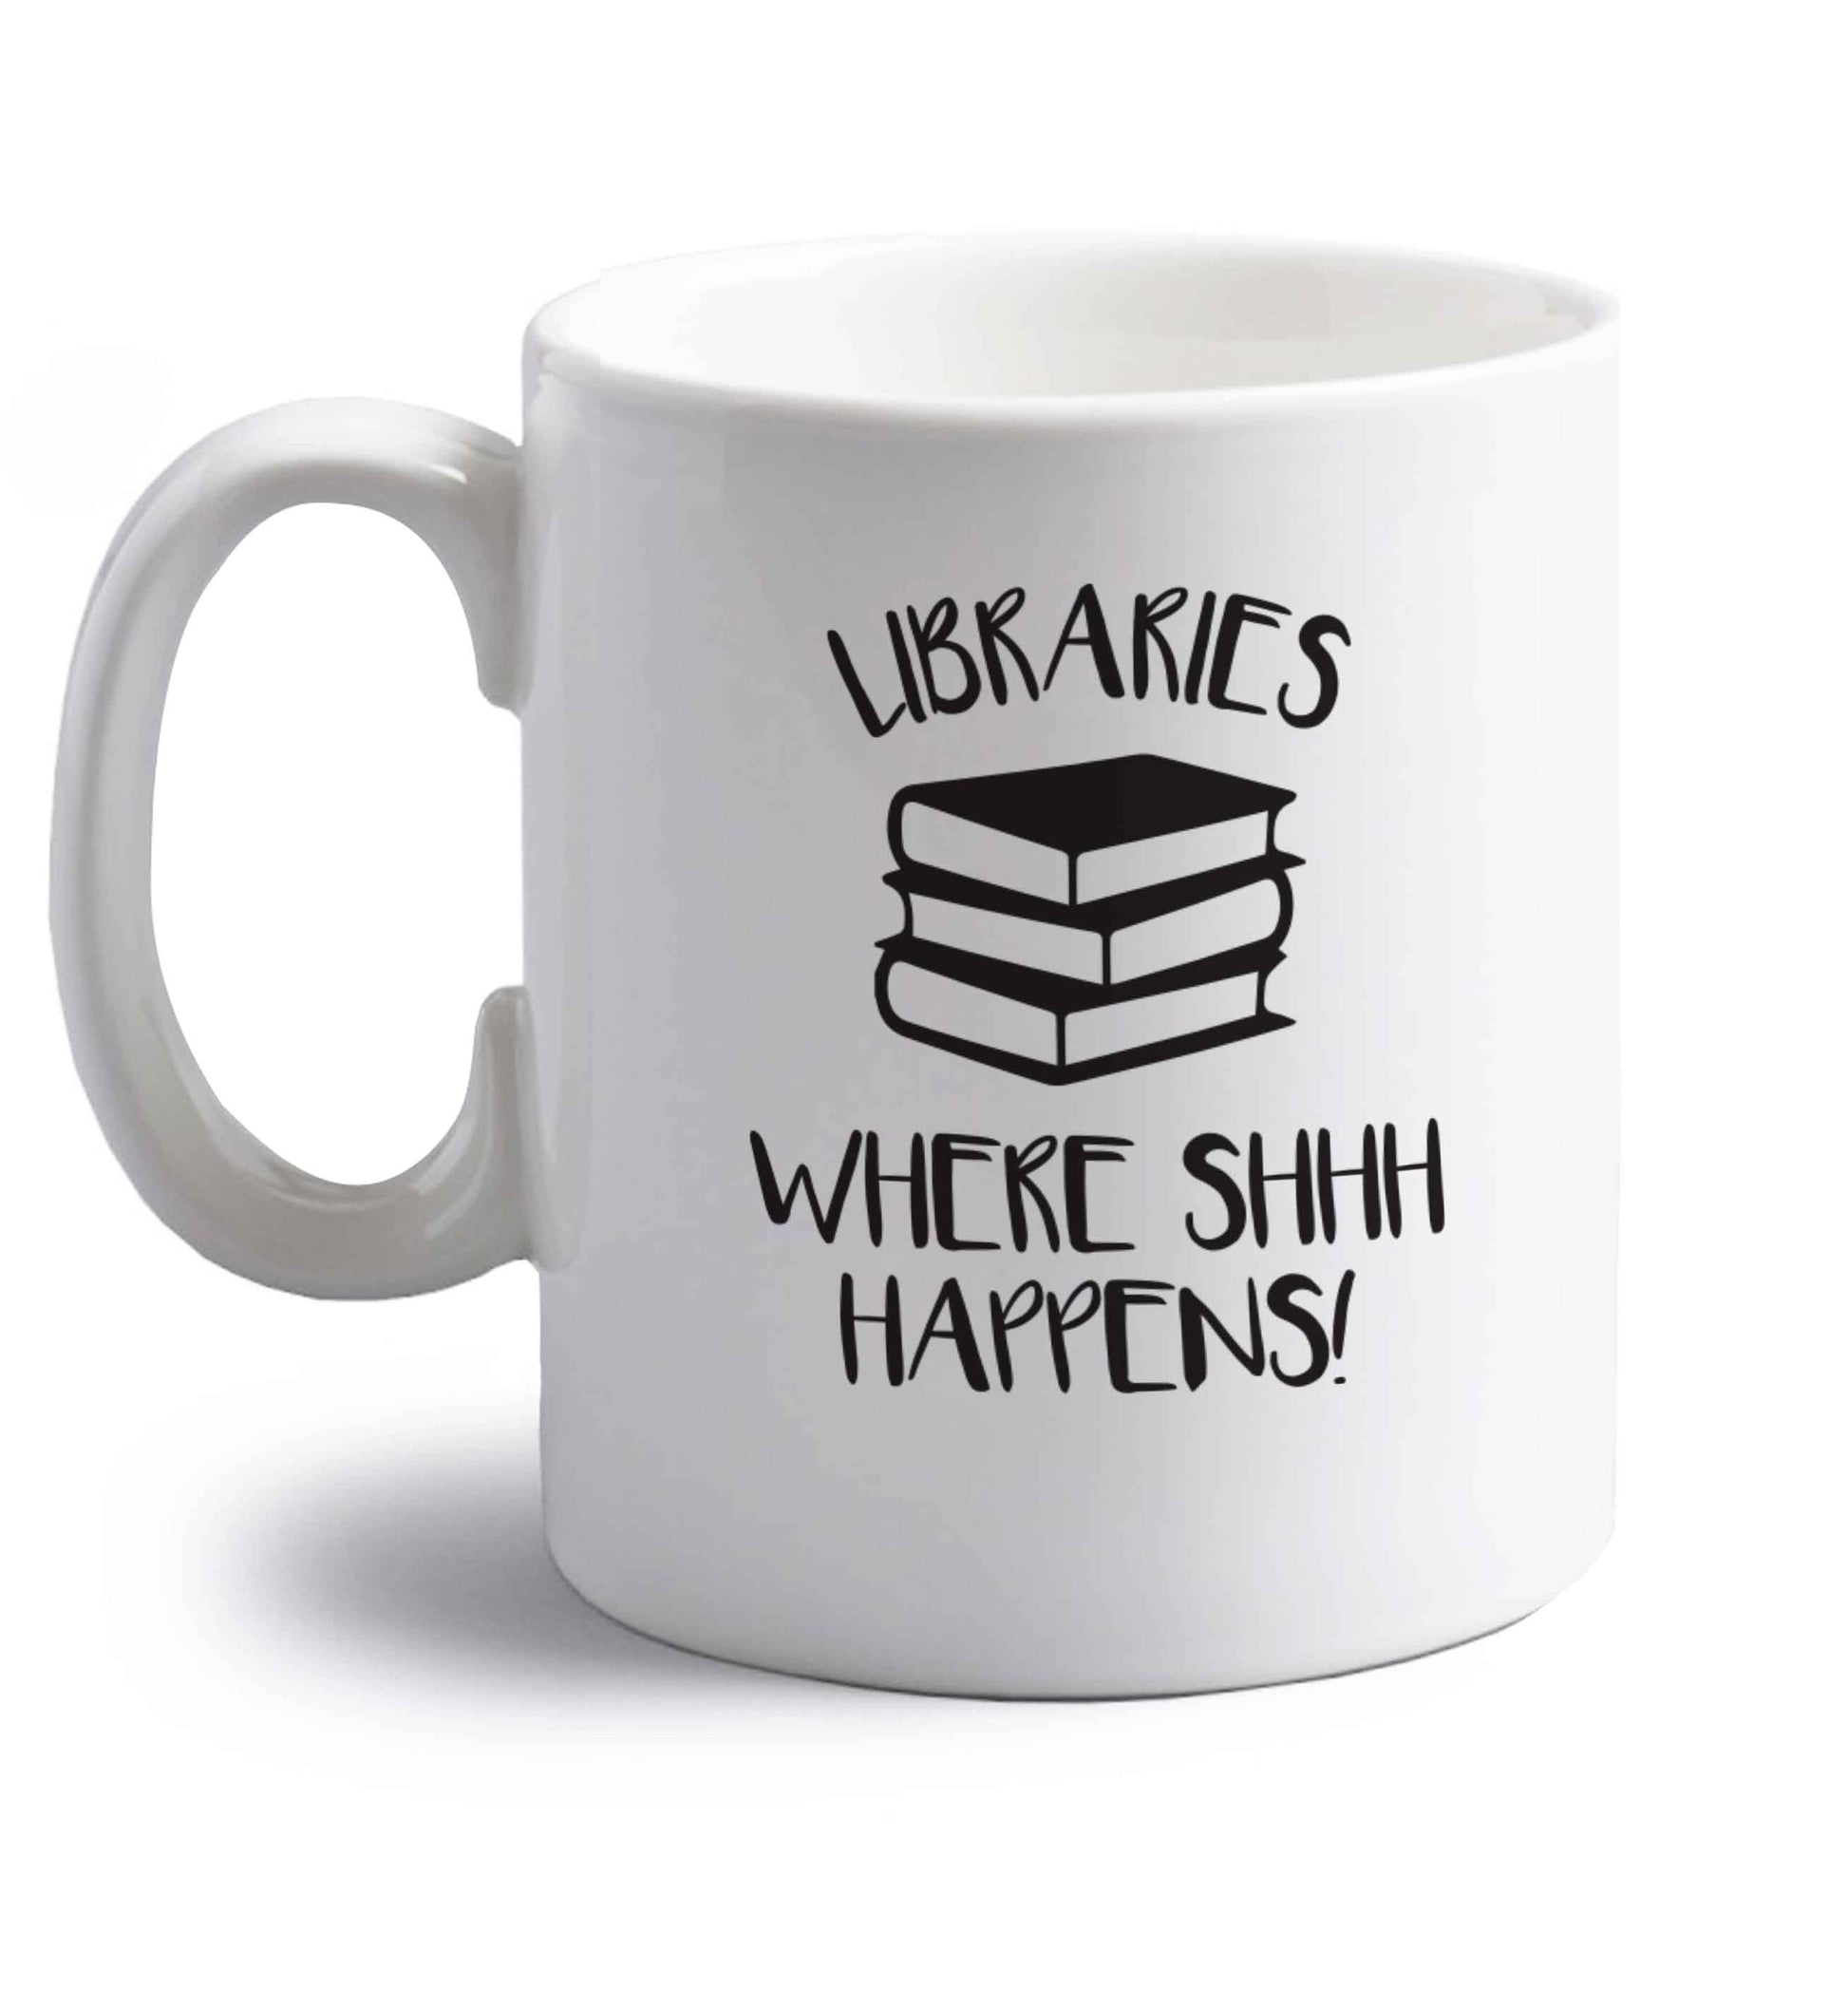 Libraries where shh happens! right handed white ceramic mug 